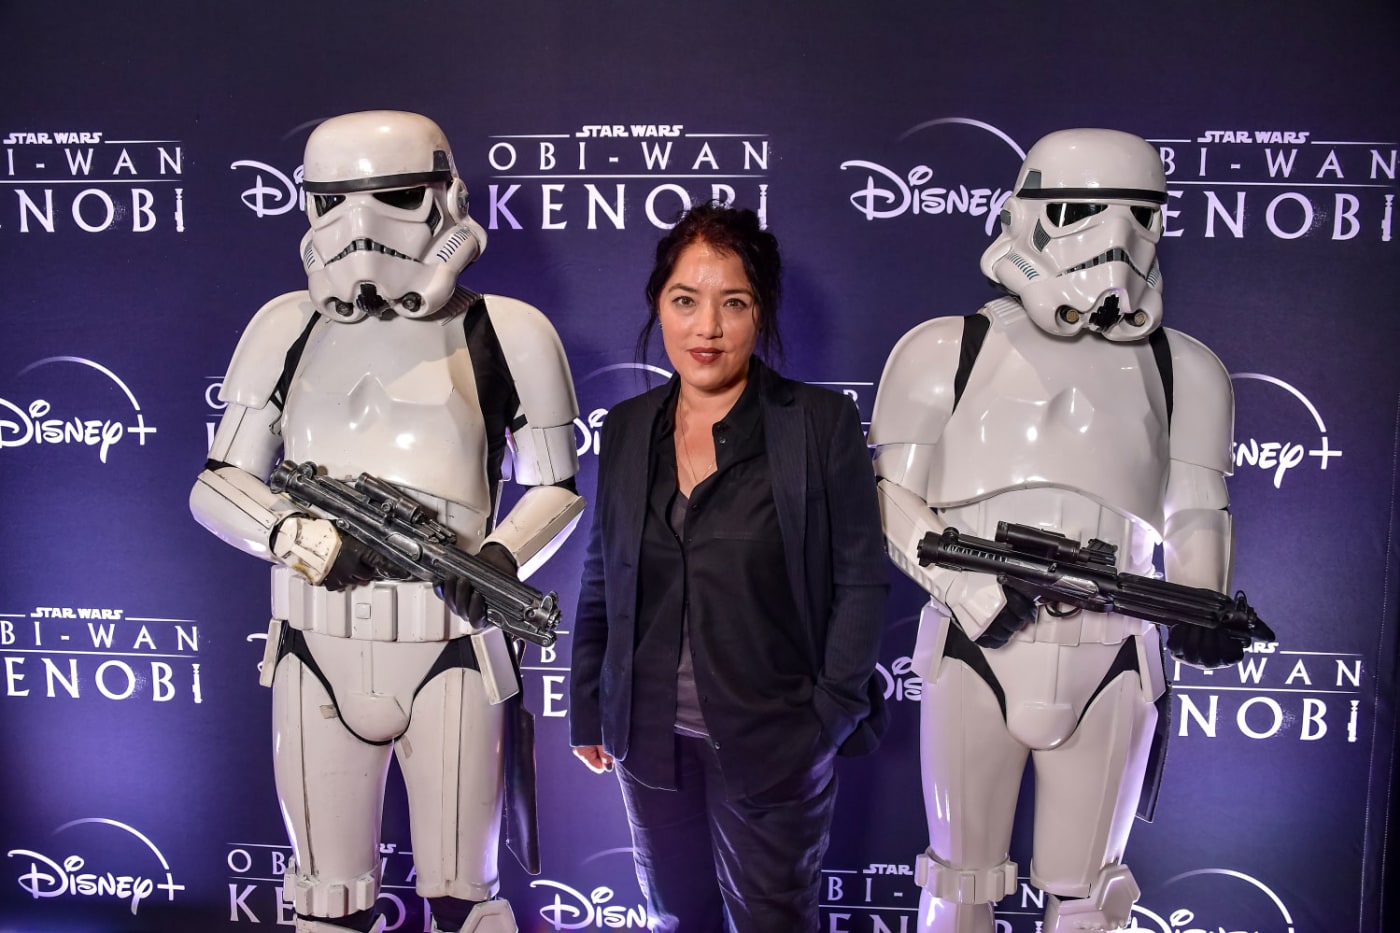 Obi Wan director Deborah Chow poses with Stormtroopers